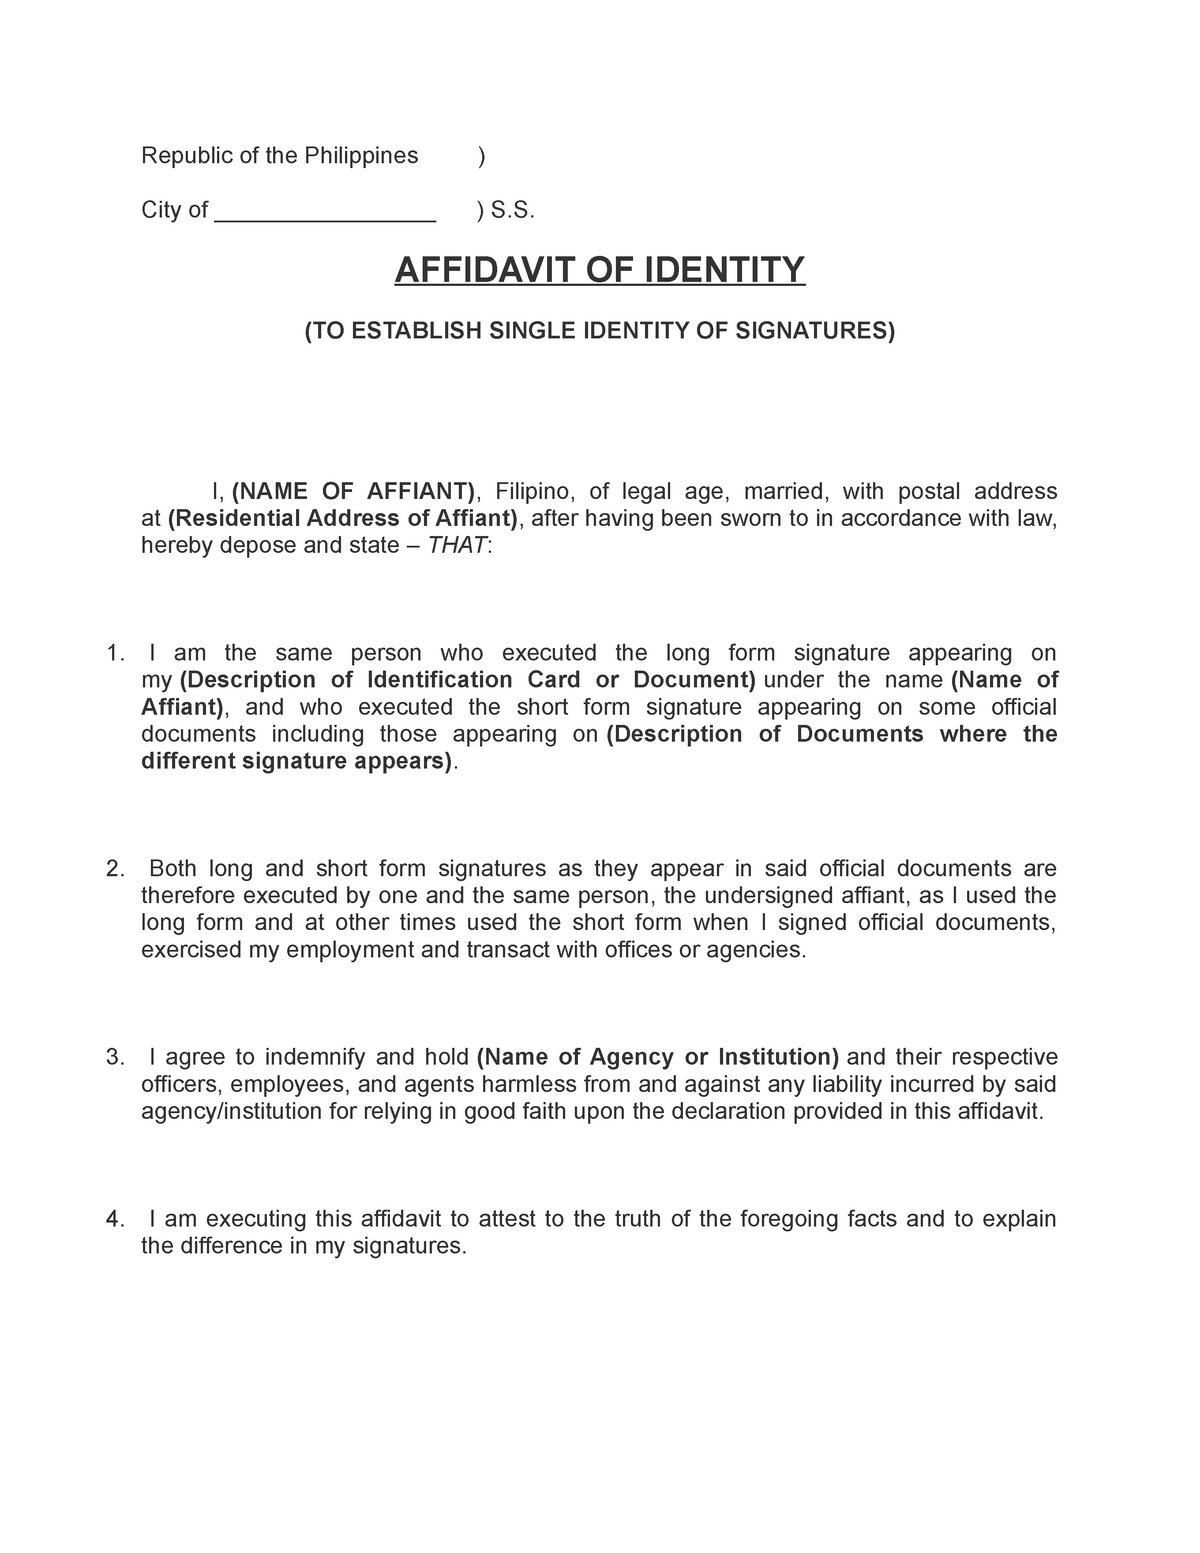 affidavit-of-identity-none-republic-of-the-philippines-city-of-s